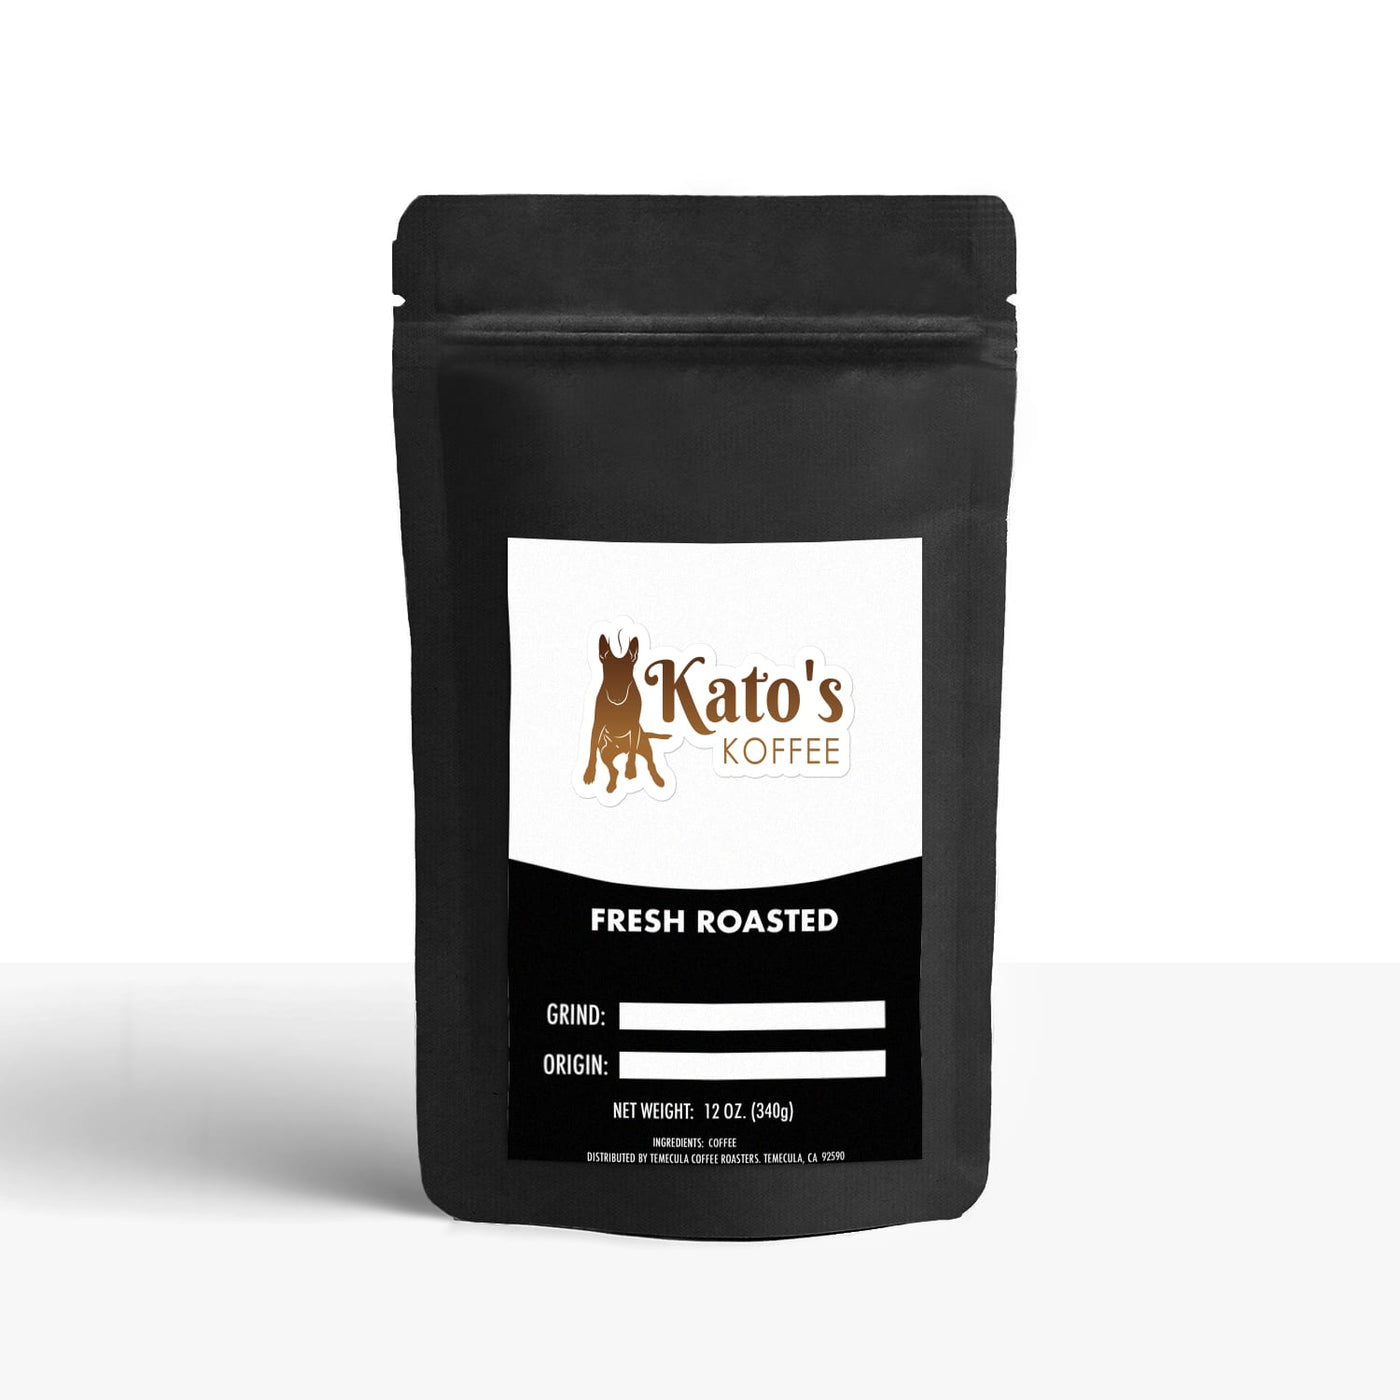 Papua New Guinea - Kato's Koffee